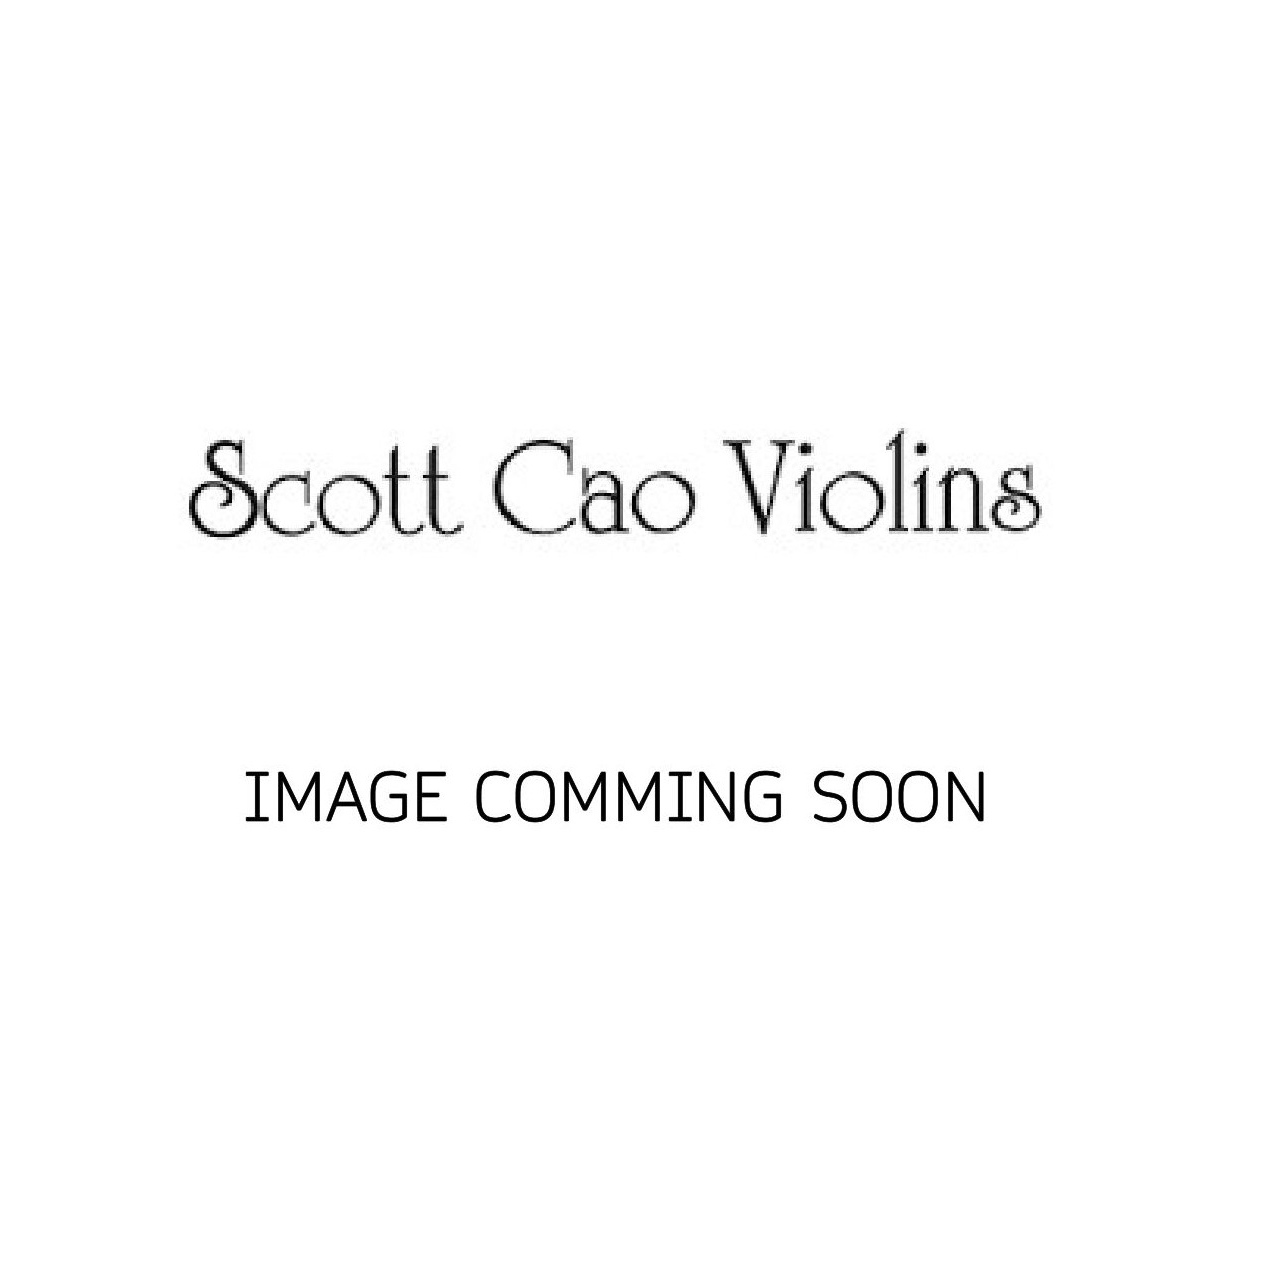 Scott Cao Viola 38,0 cm EU-komplett